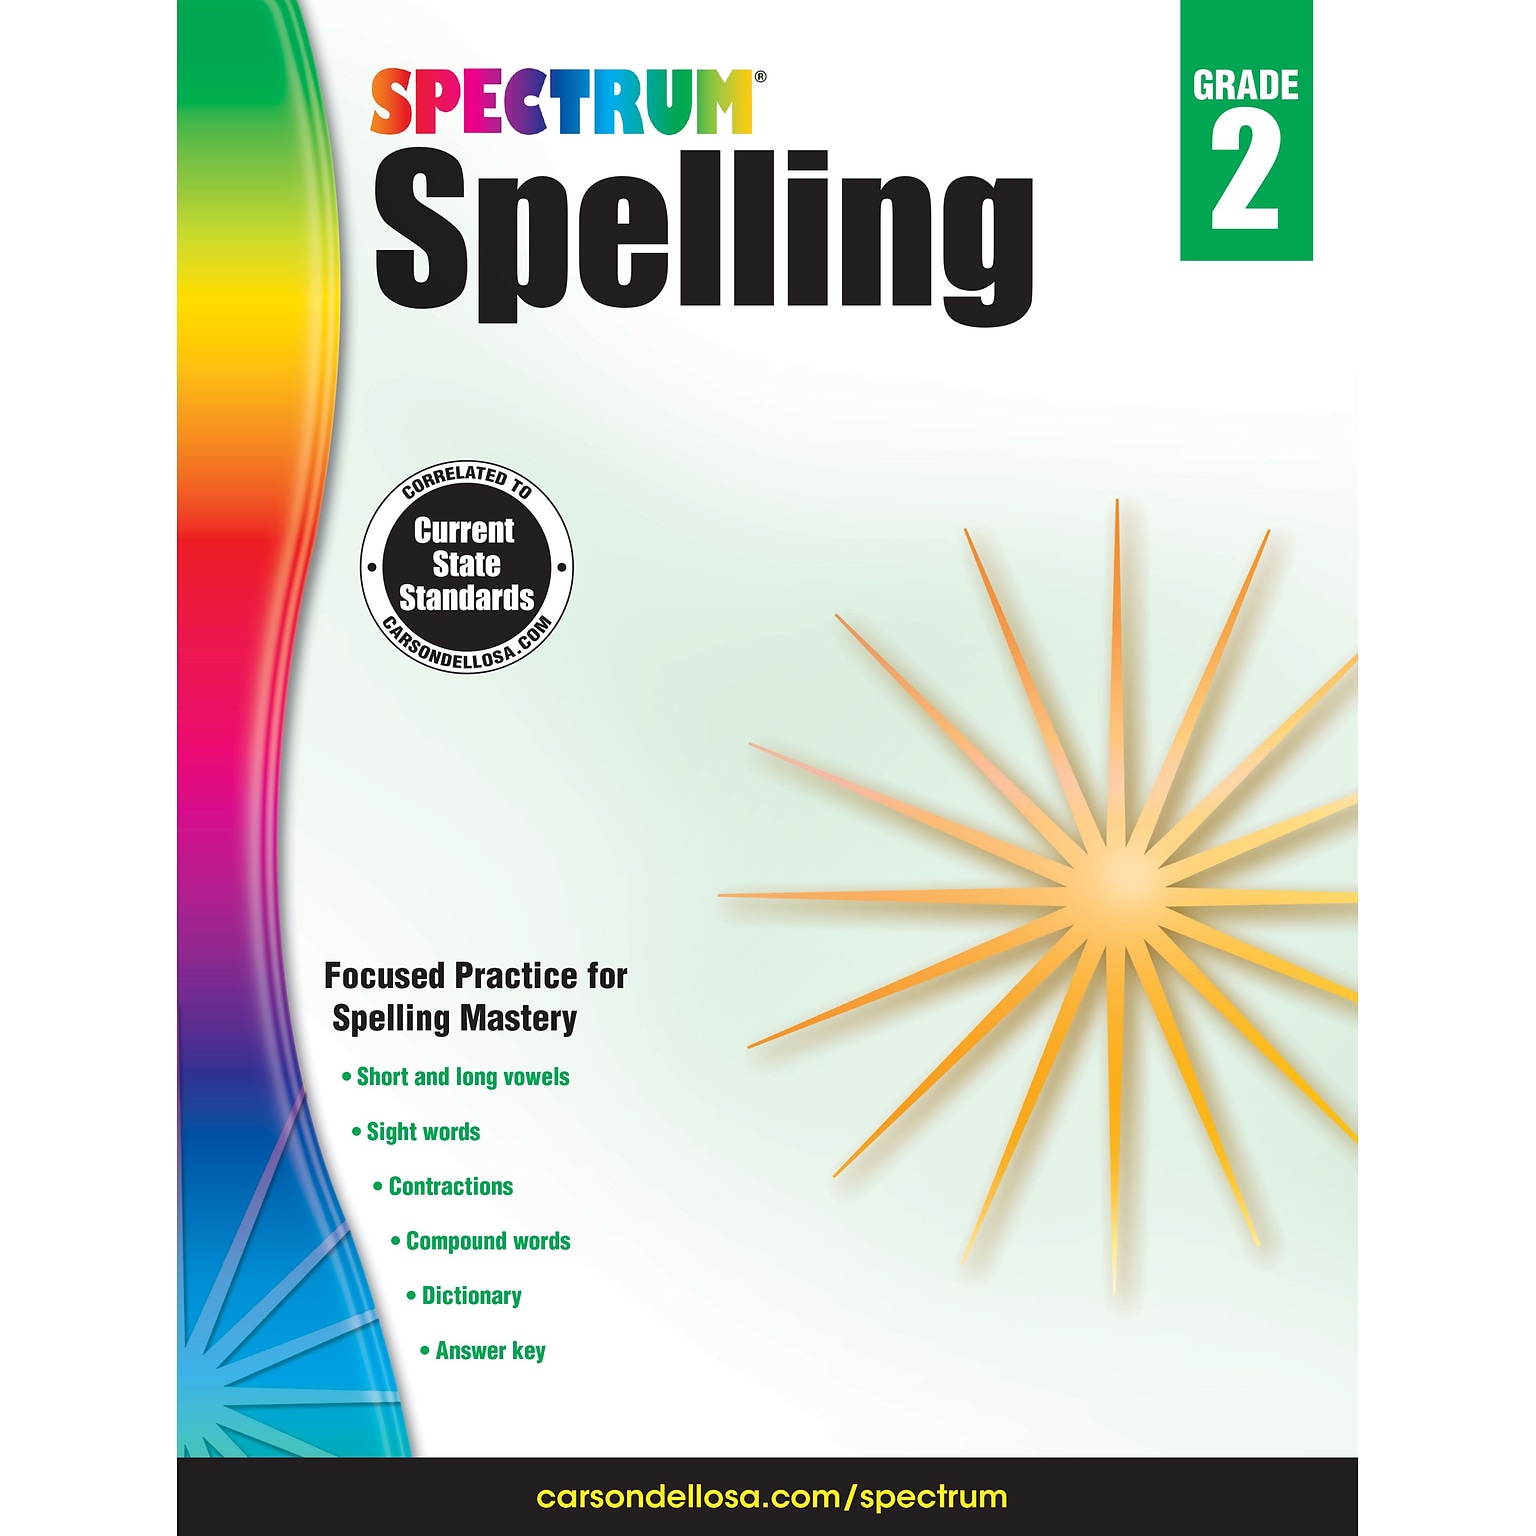 Spectrum Spelling (Grade 2)